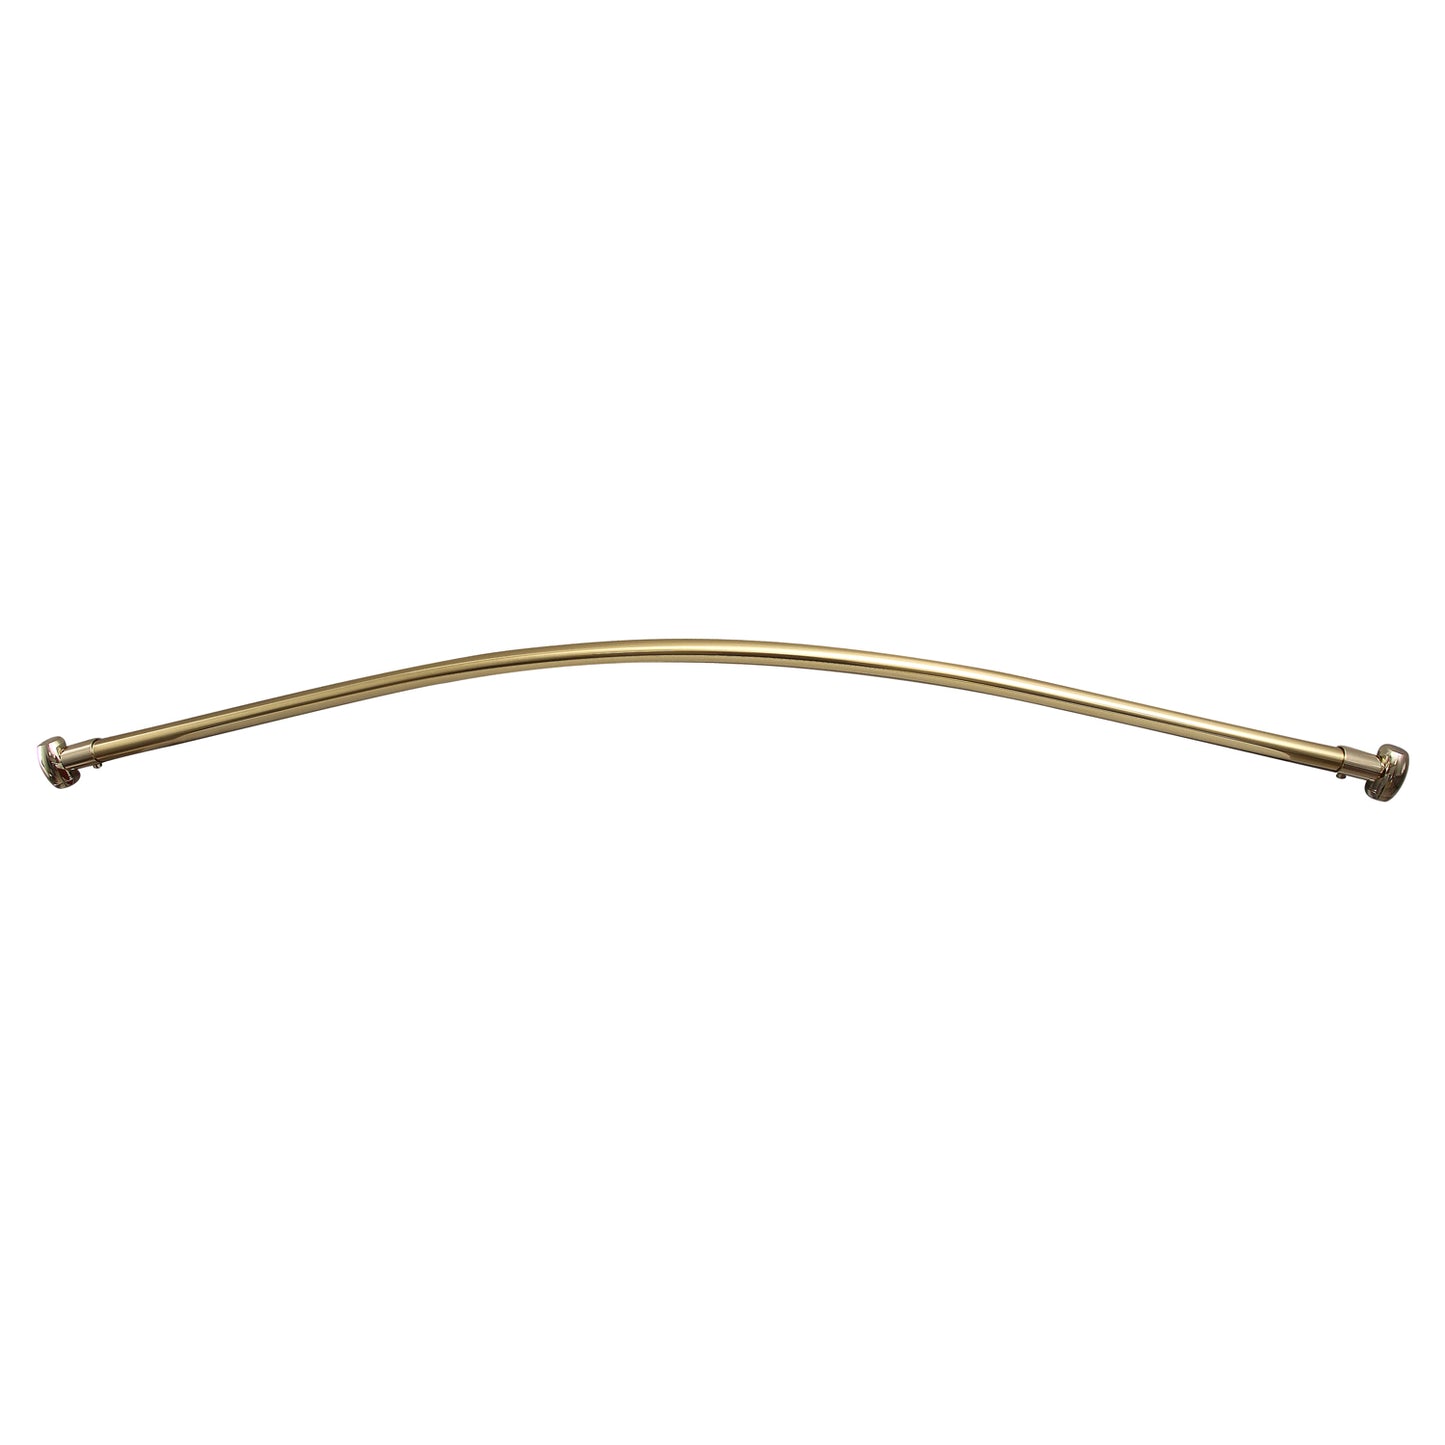 Curved 60" Shower Rod w/Flange in Polished Brass